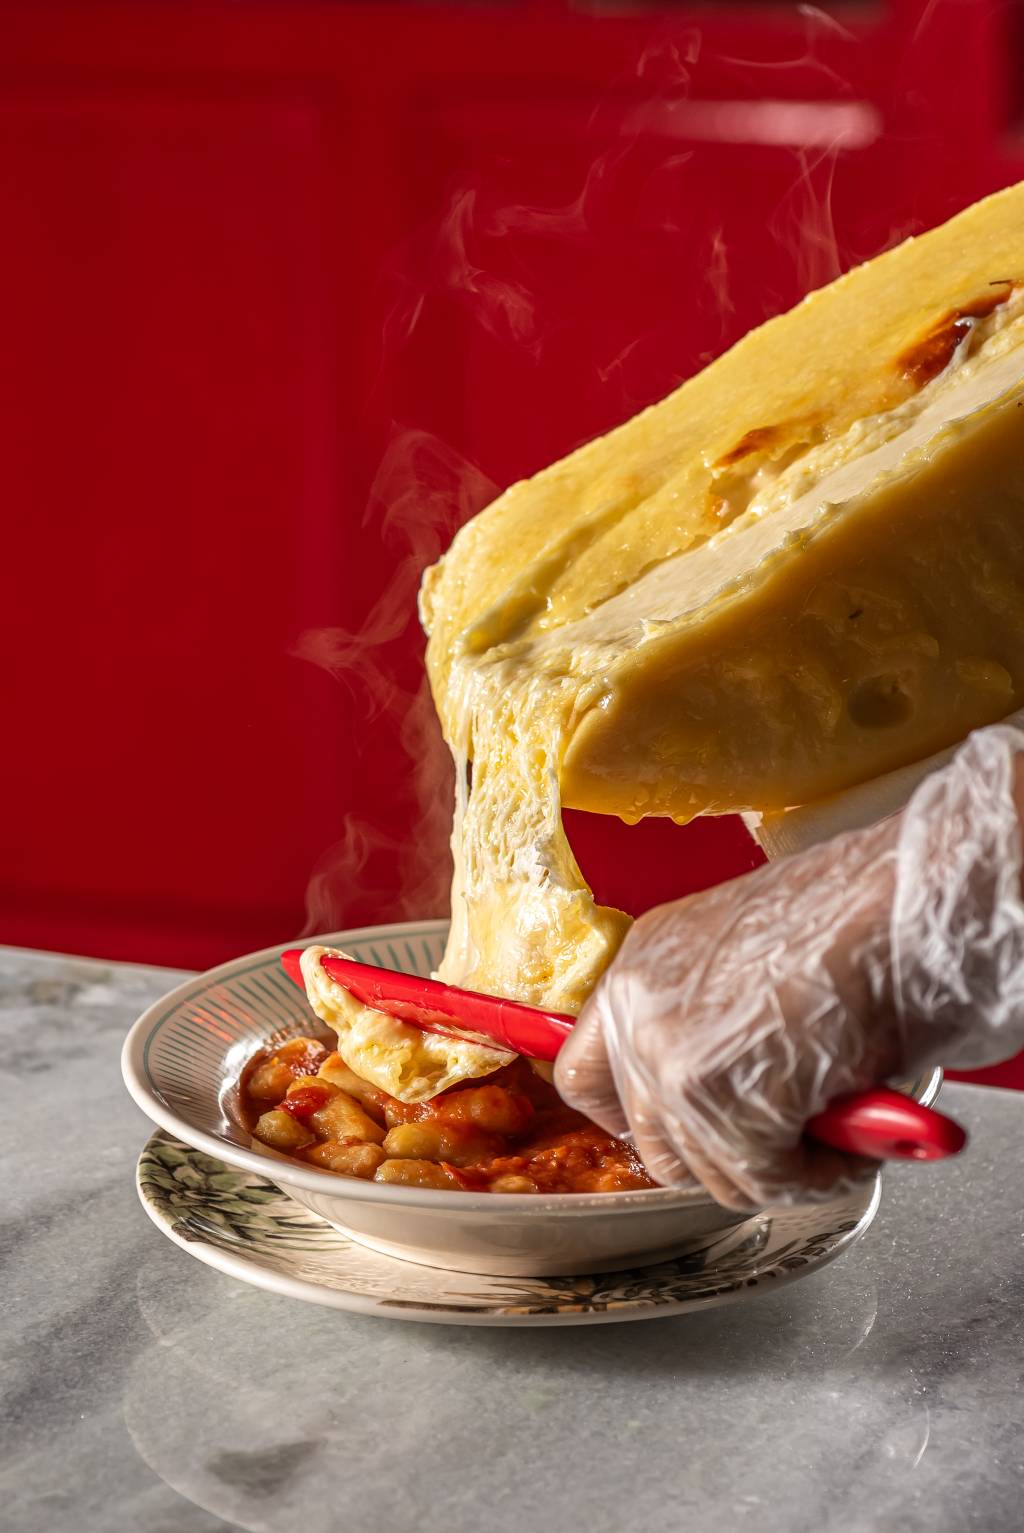 Foto mostra nhoque com queijo derretido